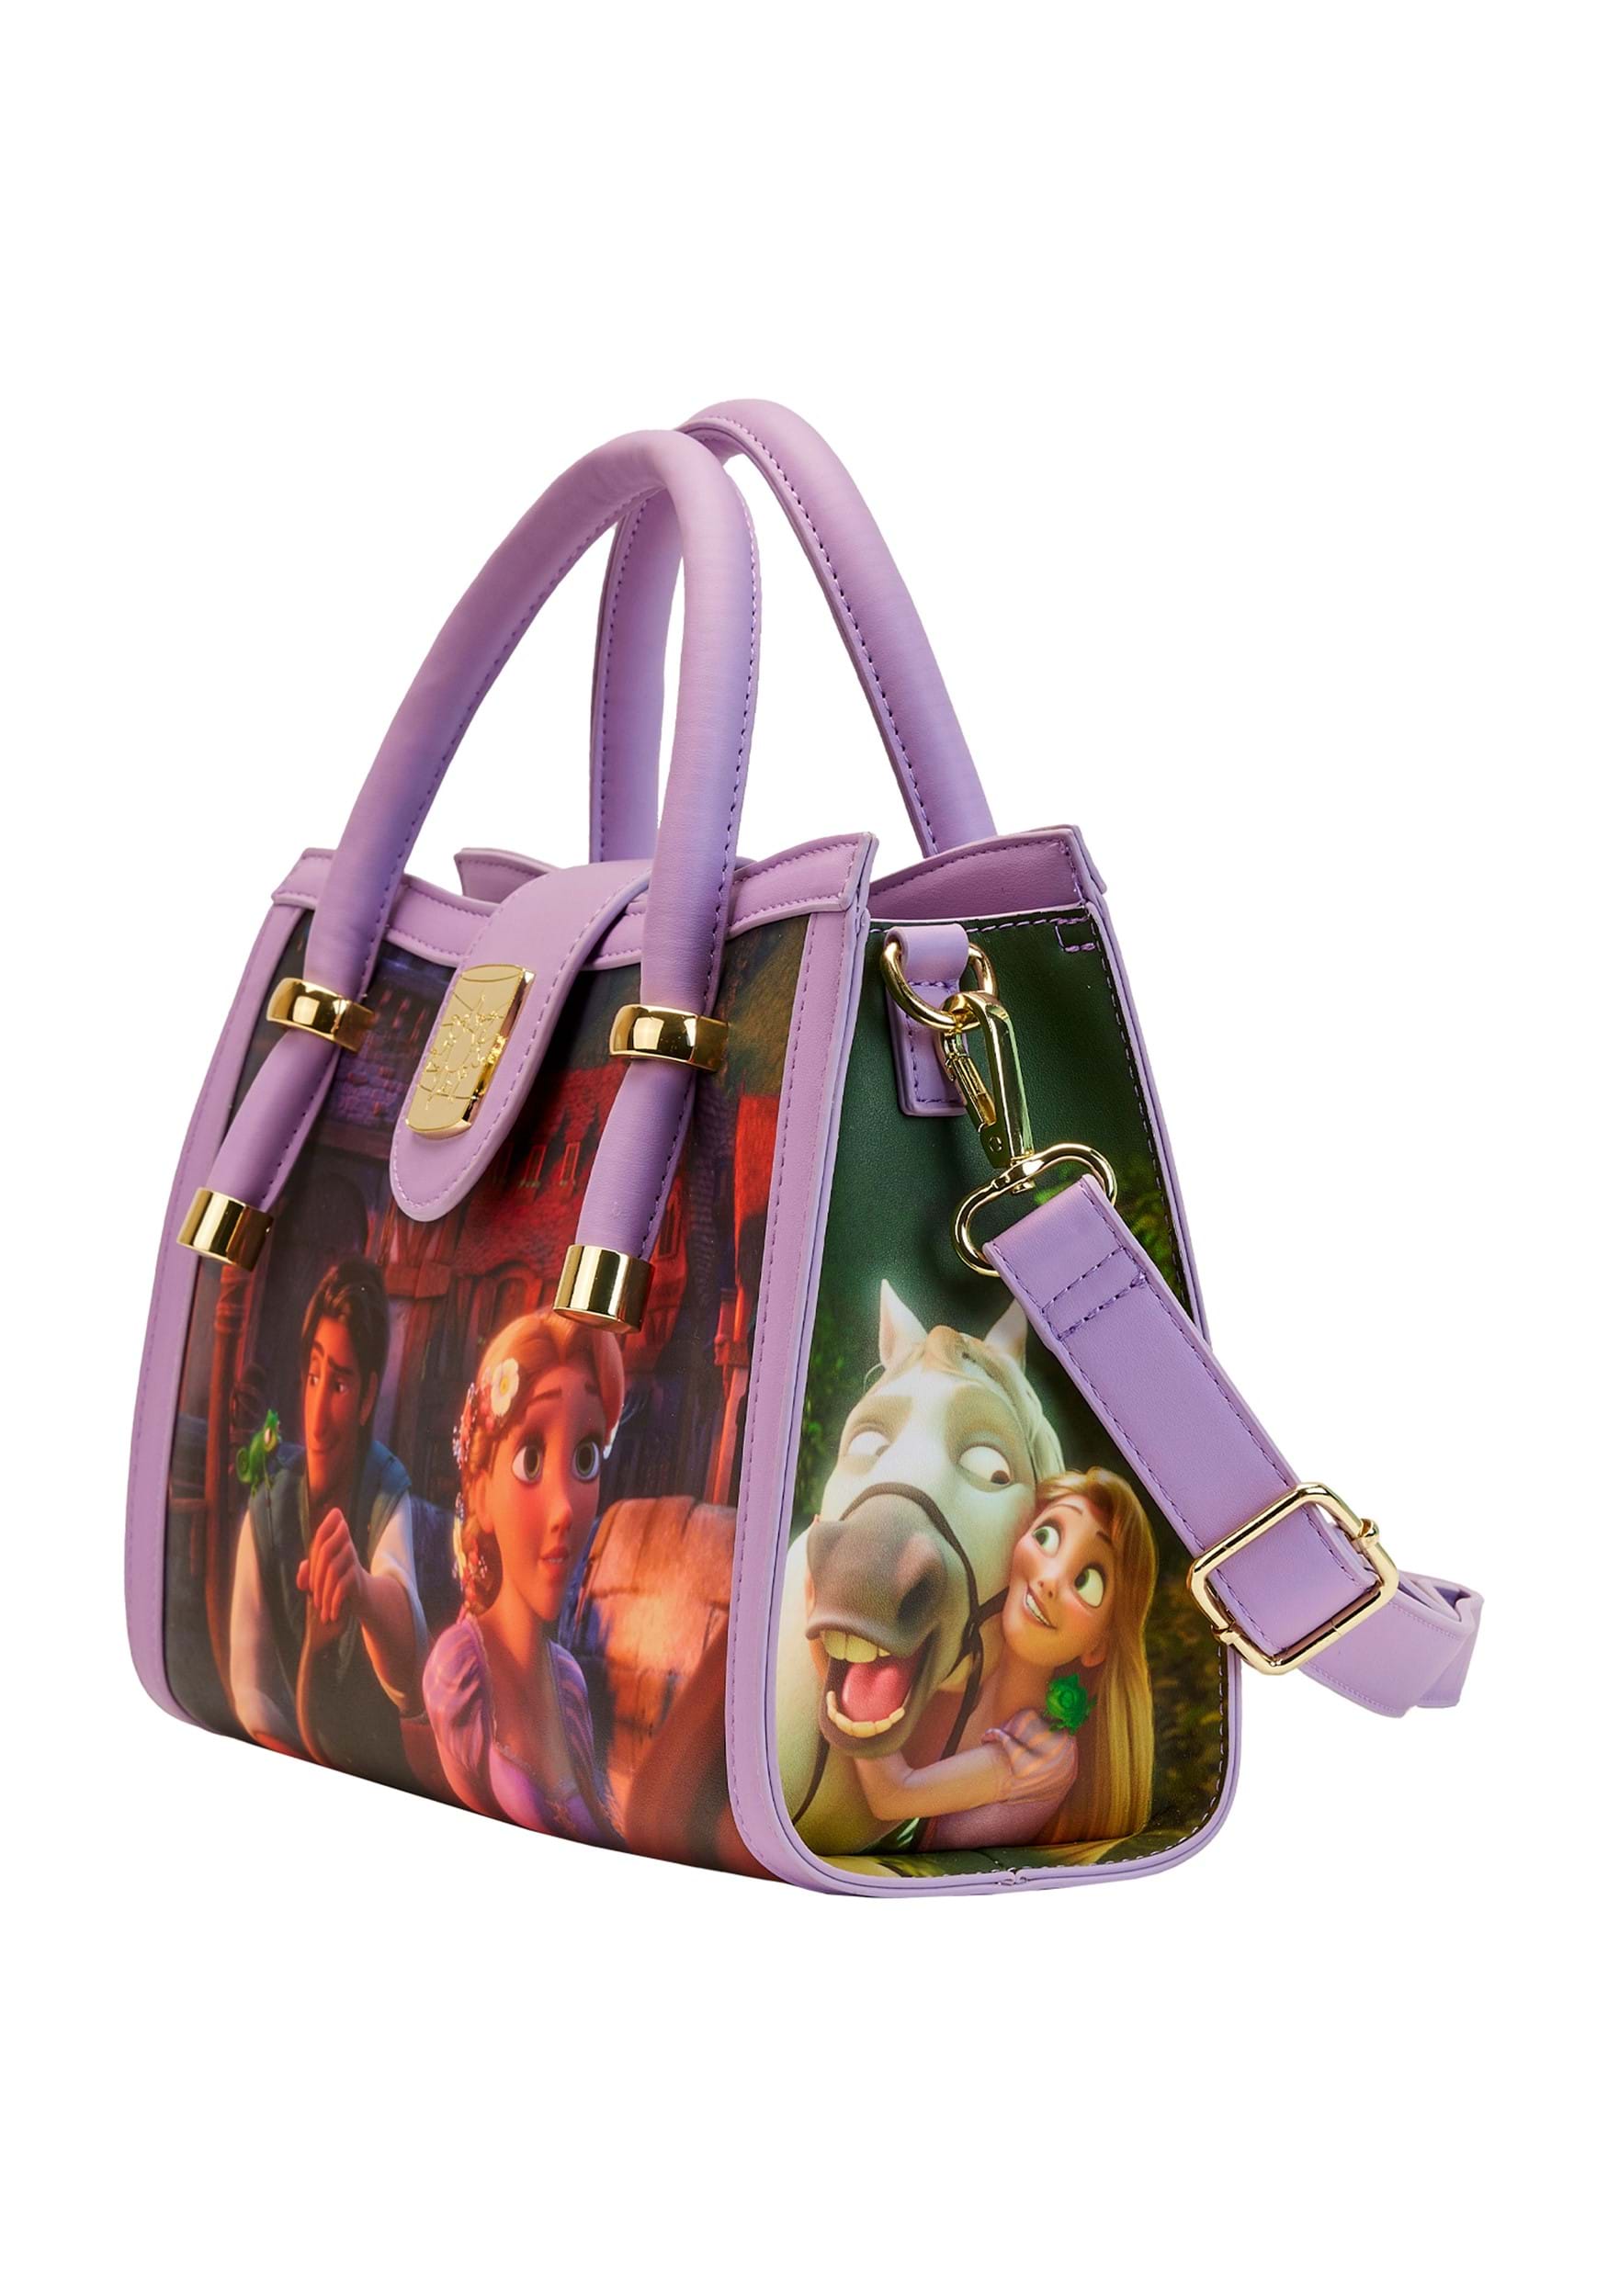 Loungefly Disney Tangled Rapunzel Scenes Mini Backpack New